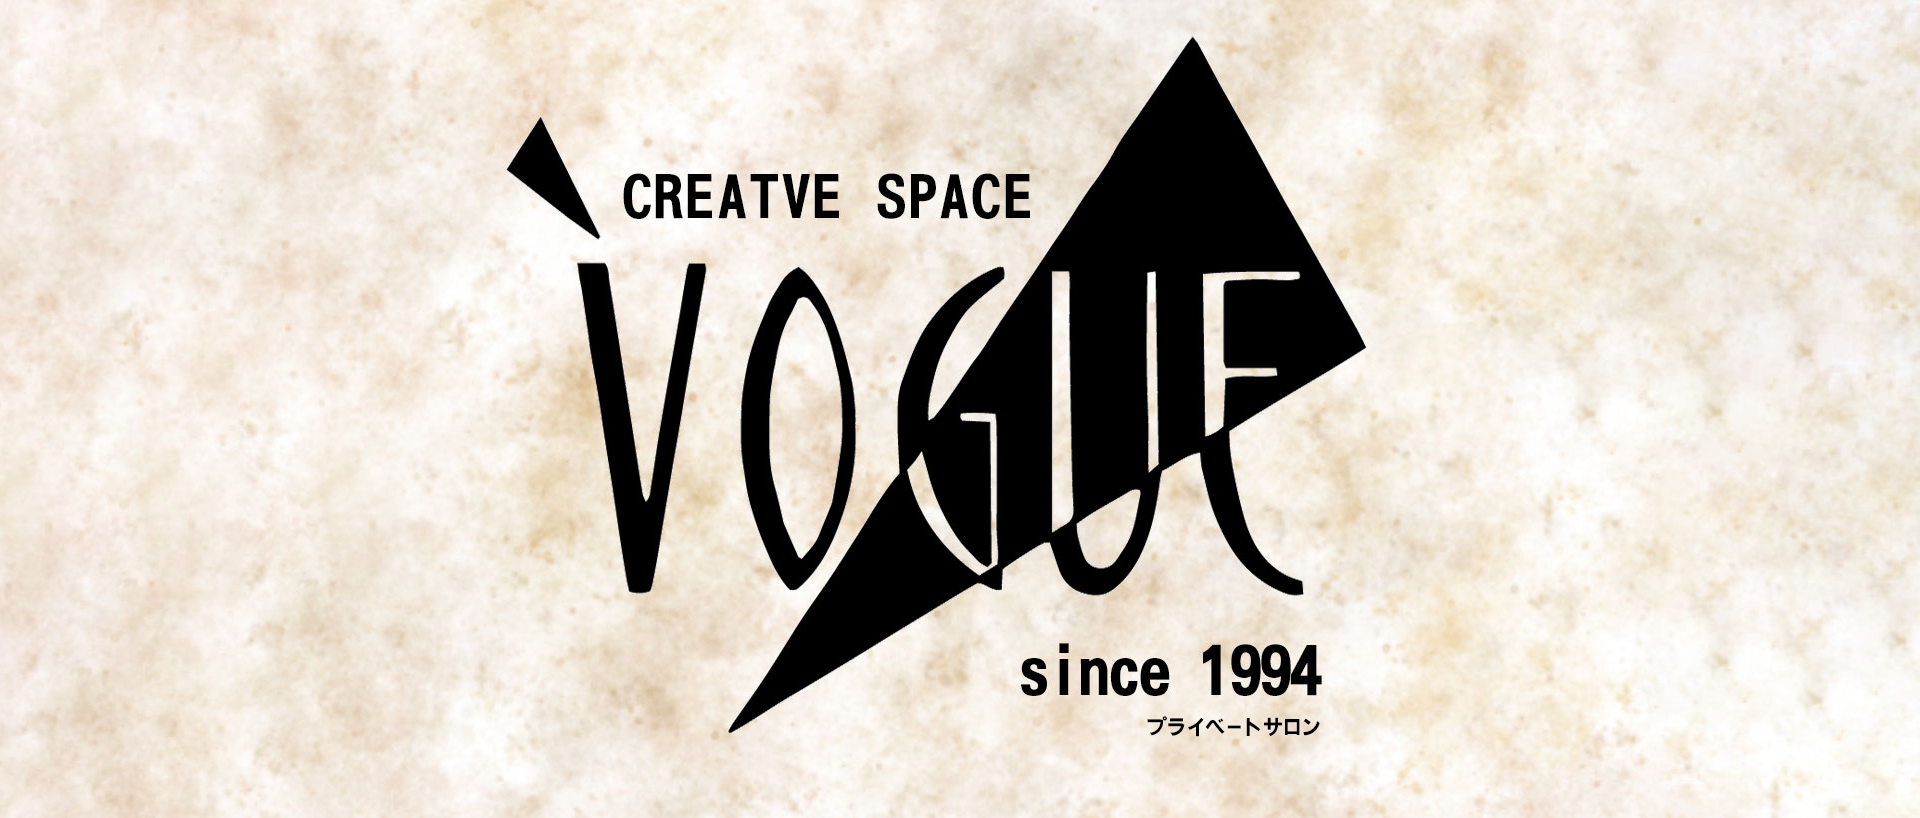 CREATIVE SPACE VOGUE